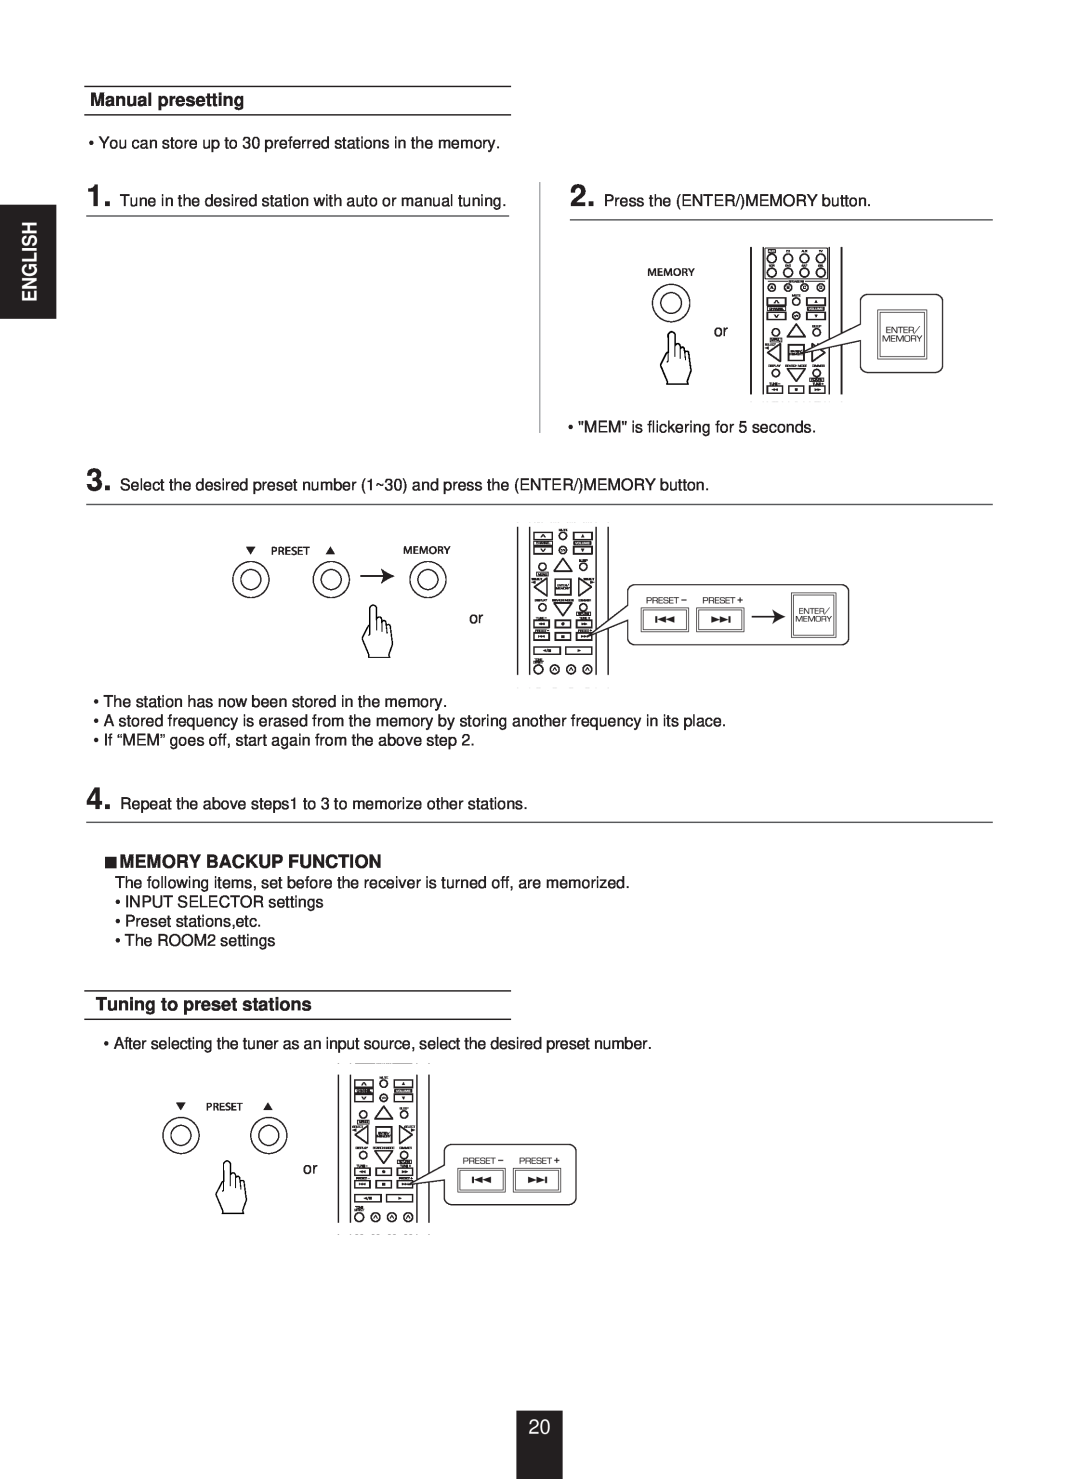 Sherwood RX-773 manual Manual presetting, Memory Backup Function, Tuning to preset stations, English 